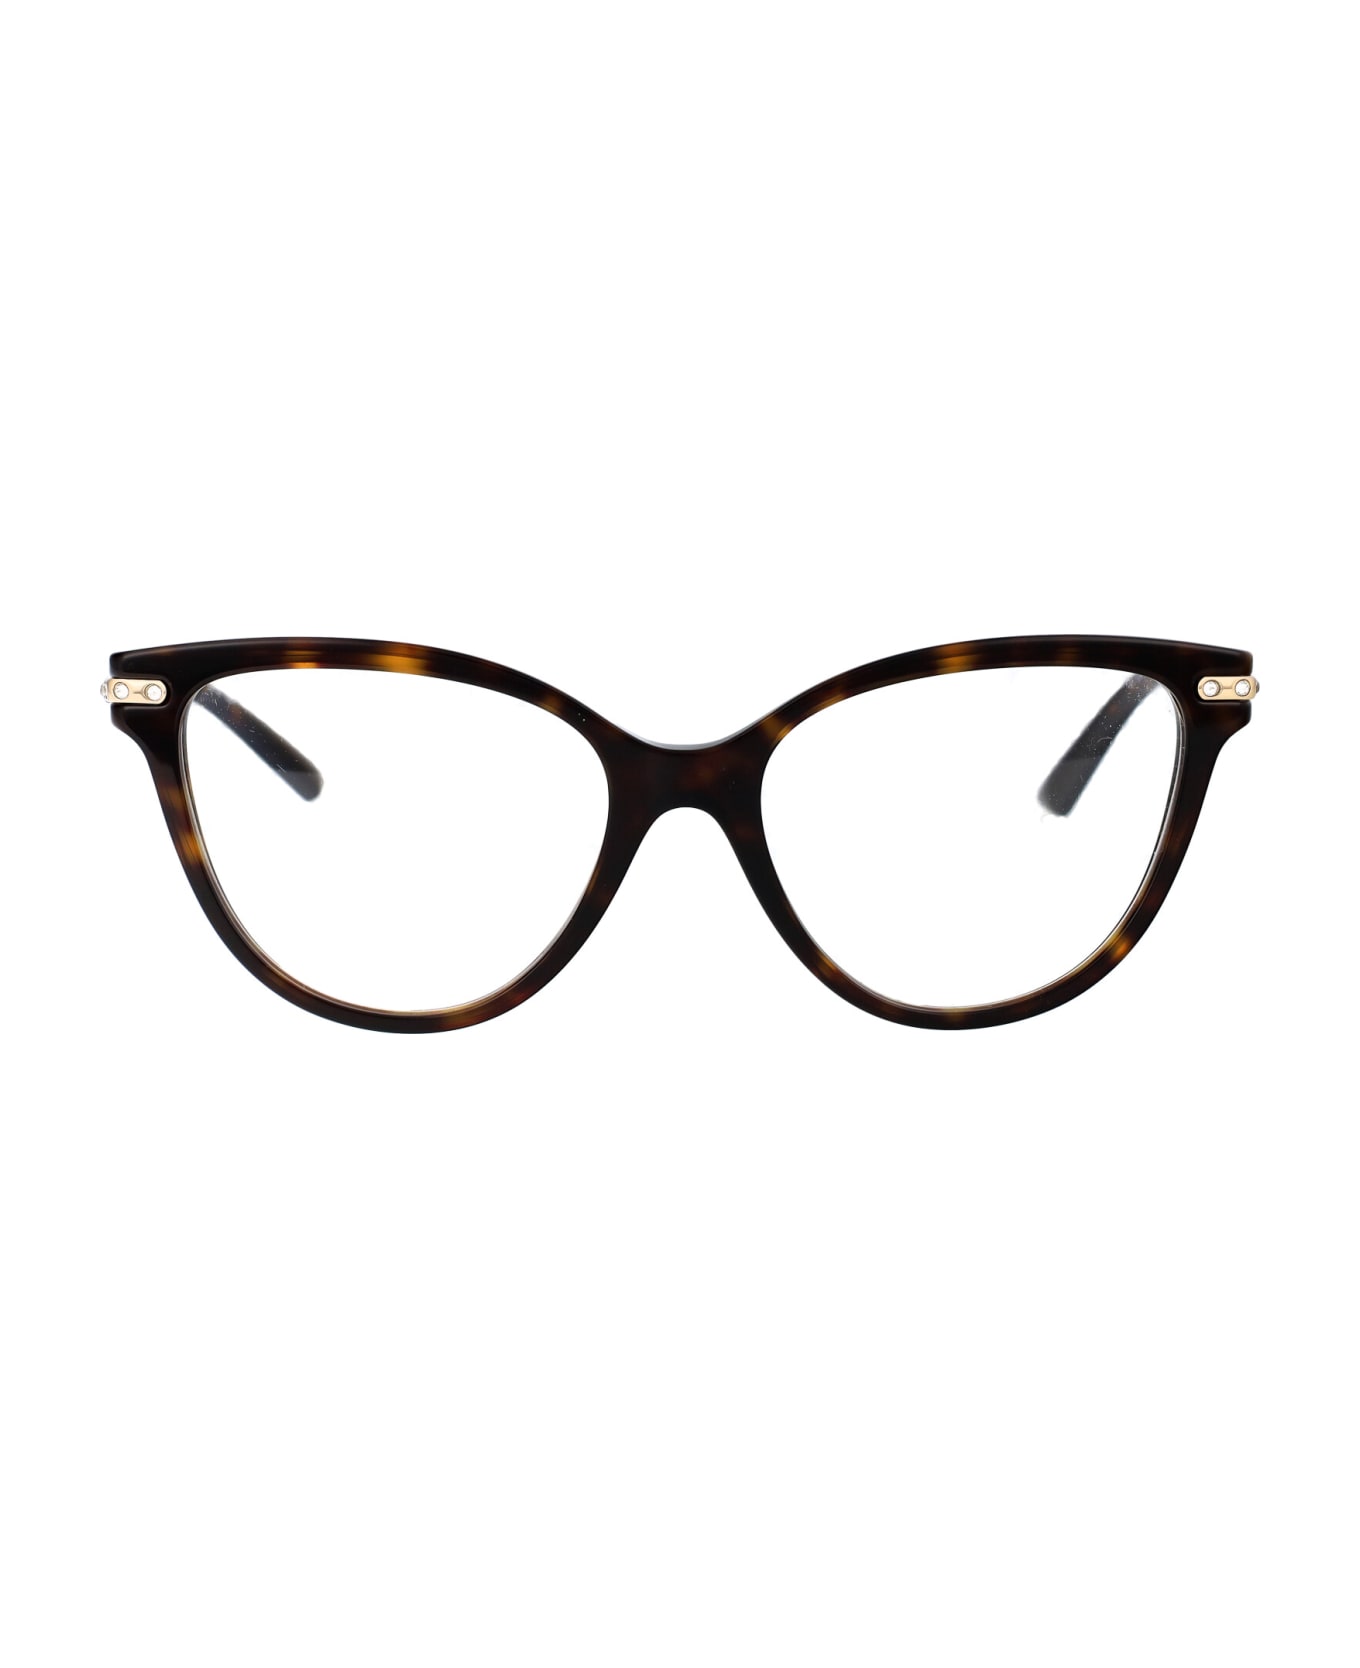 Jimmy Choo Eyewear 0jc3001b Glasses - 5002 HAVANA